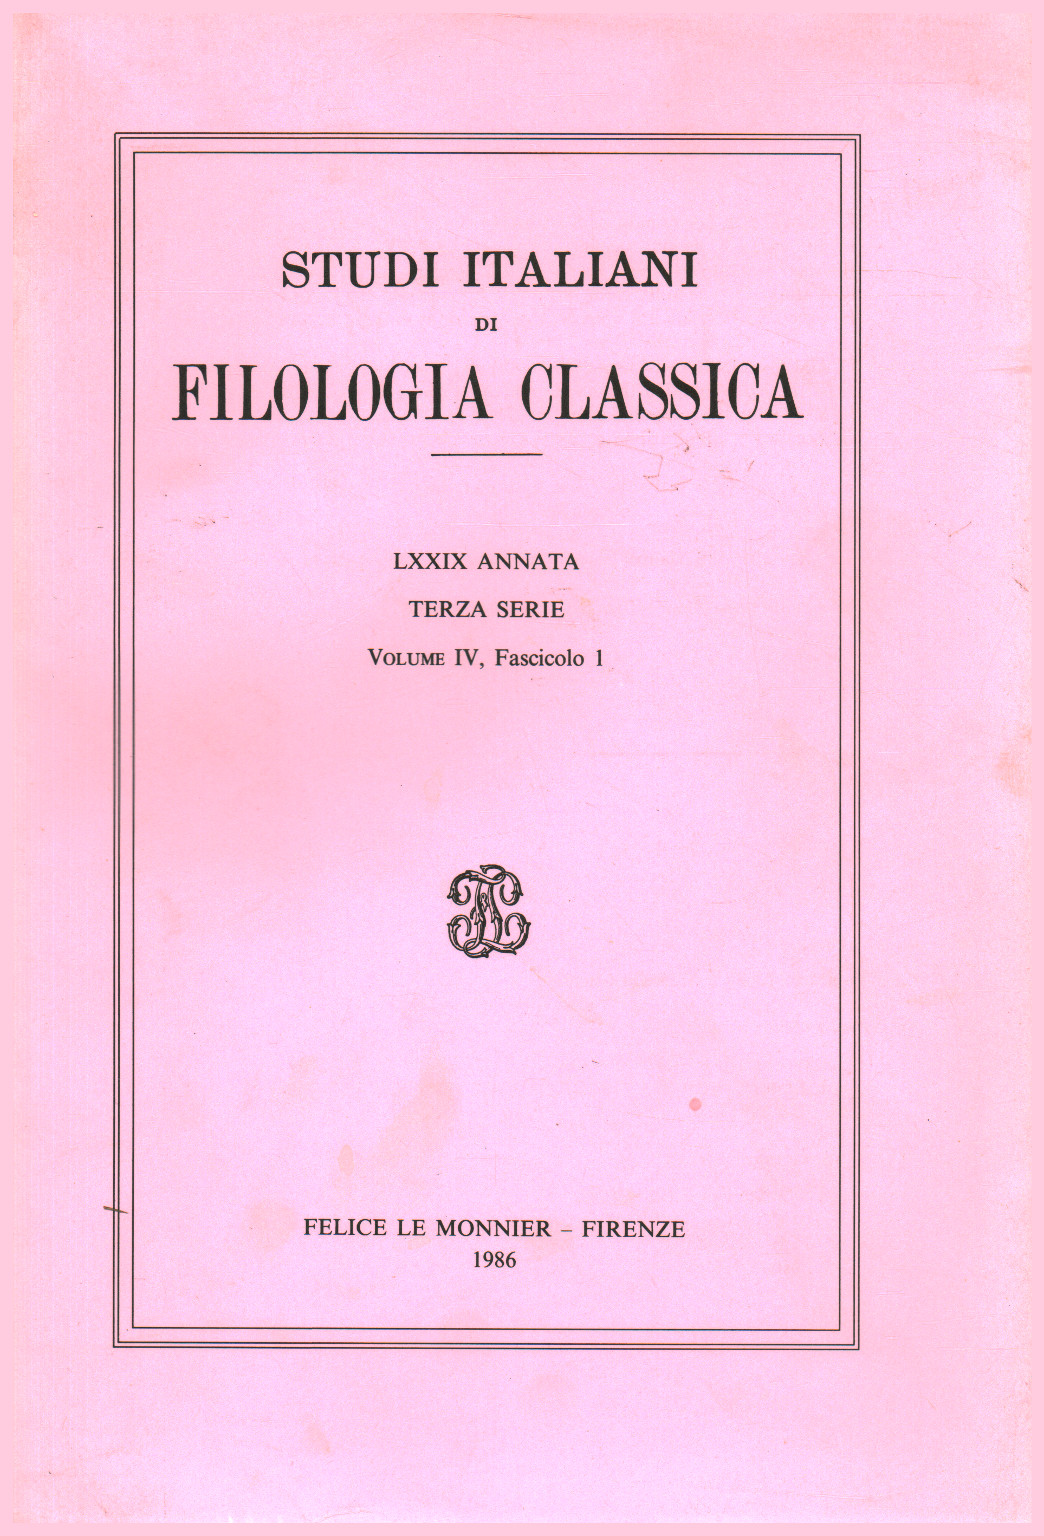 Studi italiani di filologia classica LXXIX Annata., s.a.